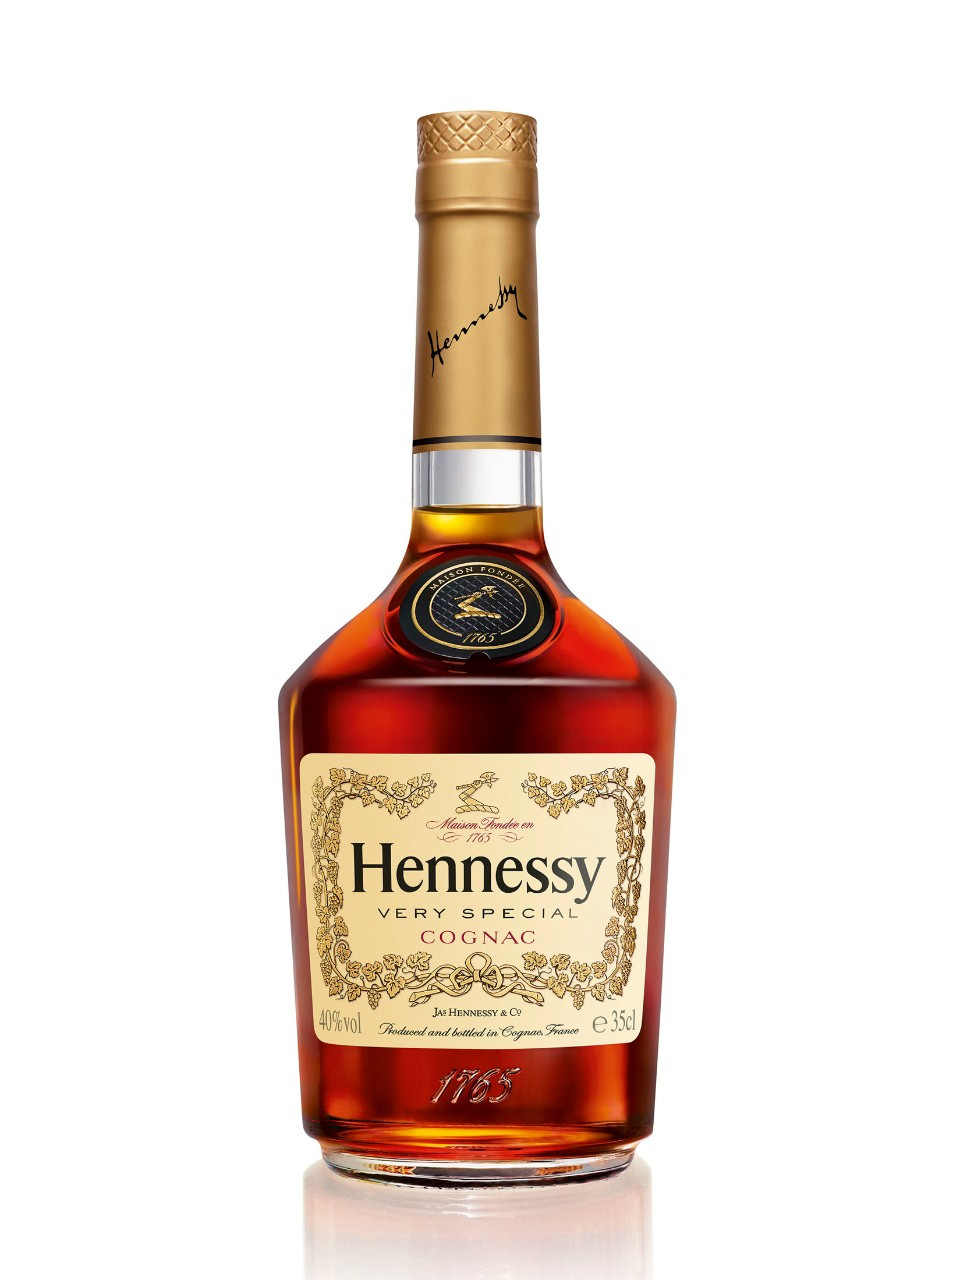 Hennessy vs cognac 375 ml